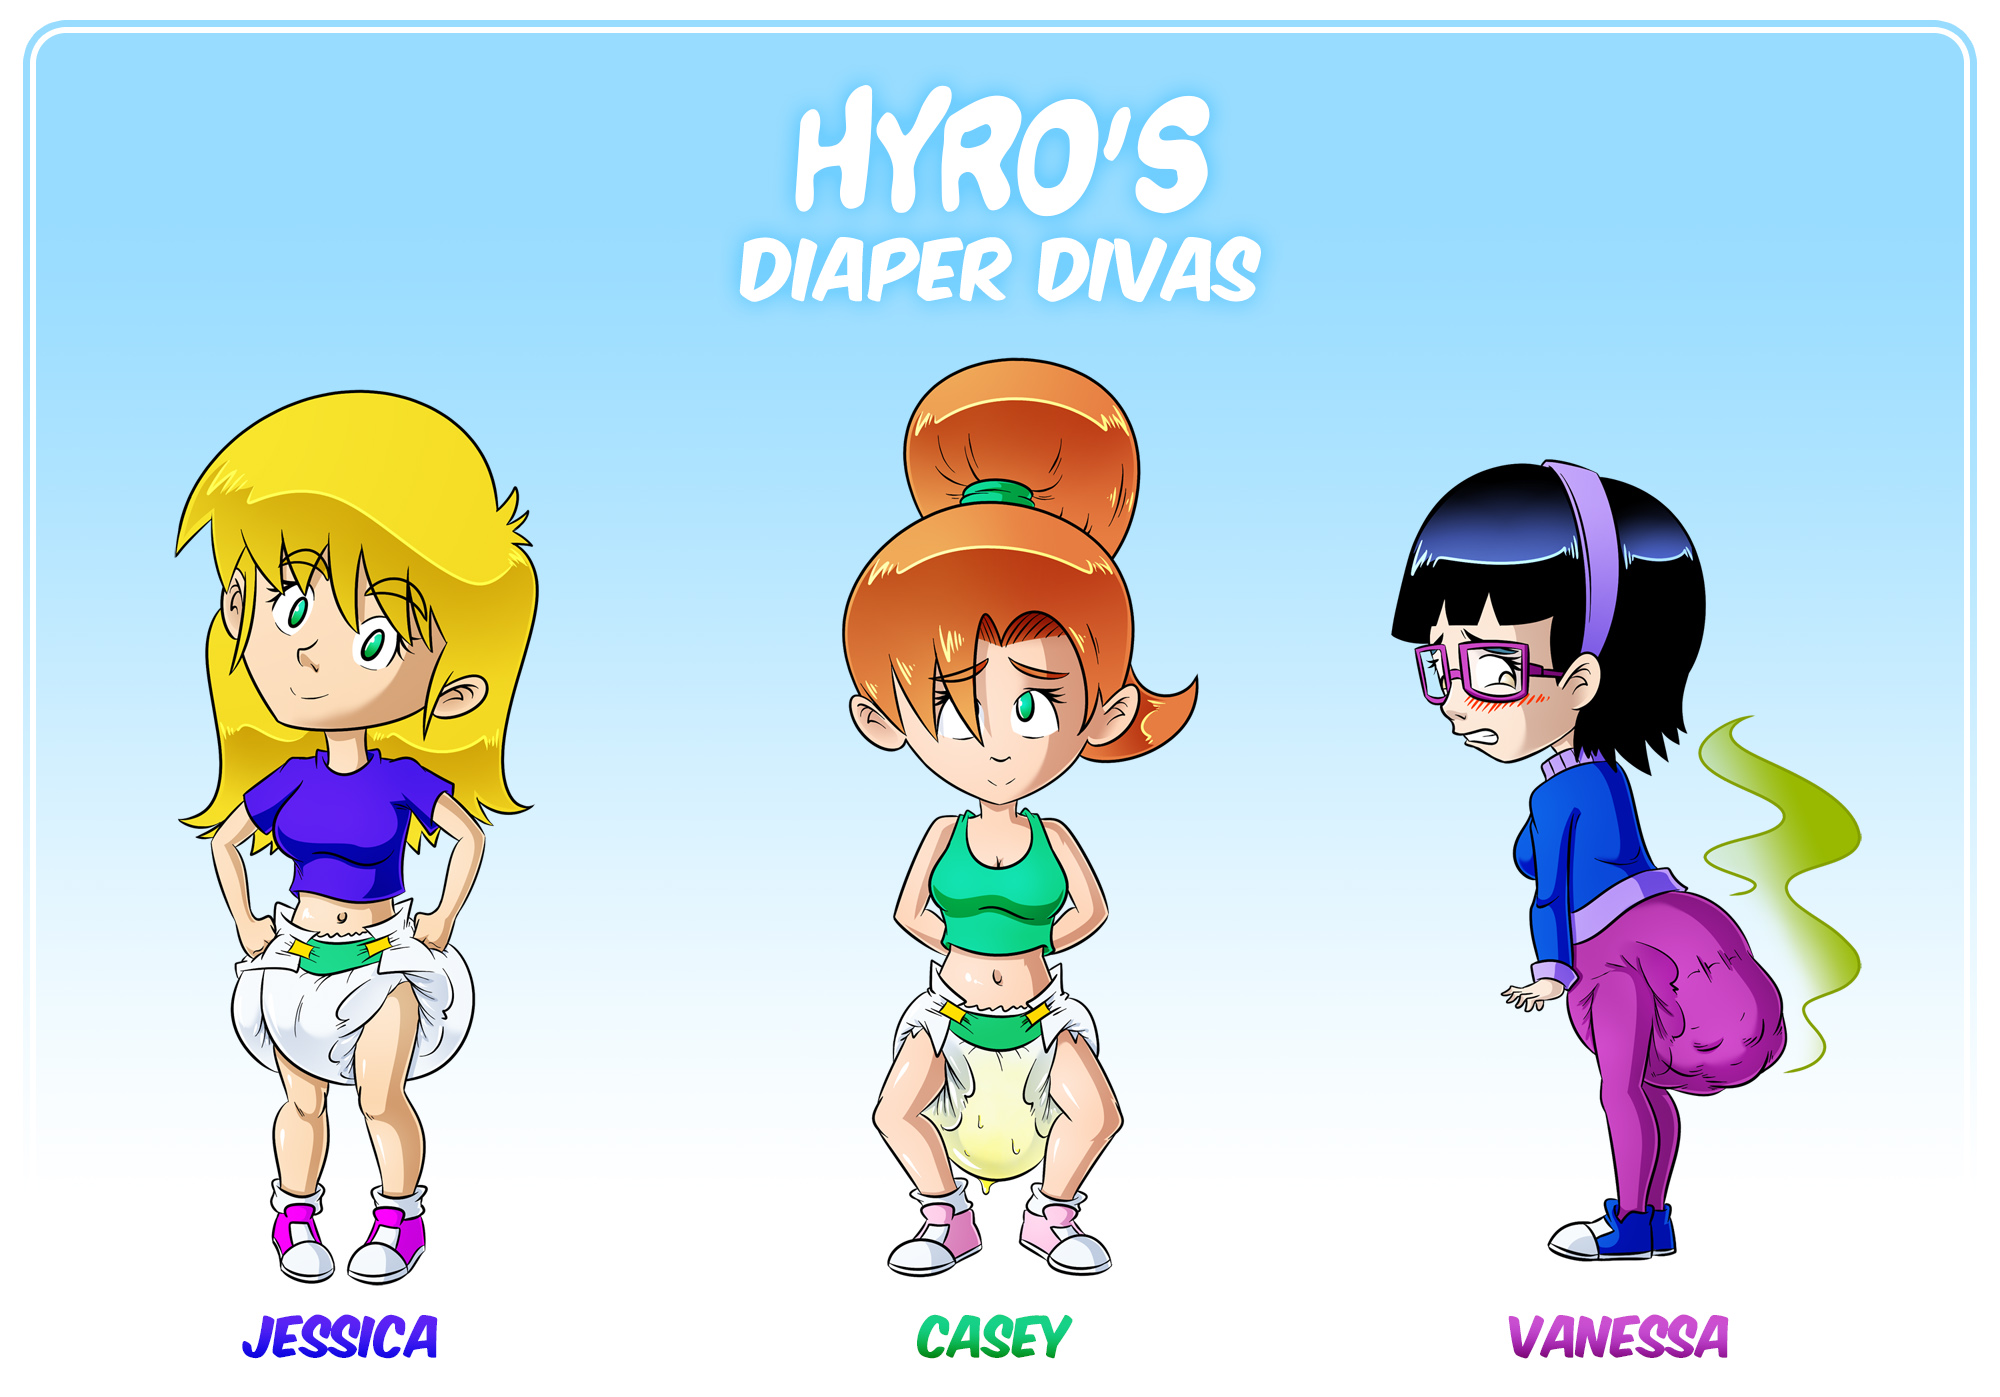 diva diaper hyro - www.editions-mem.com.